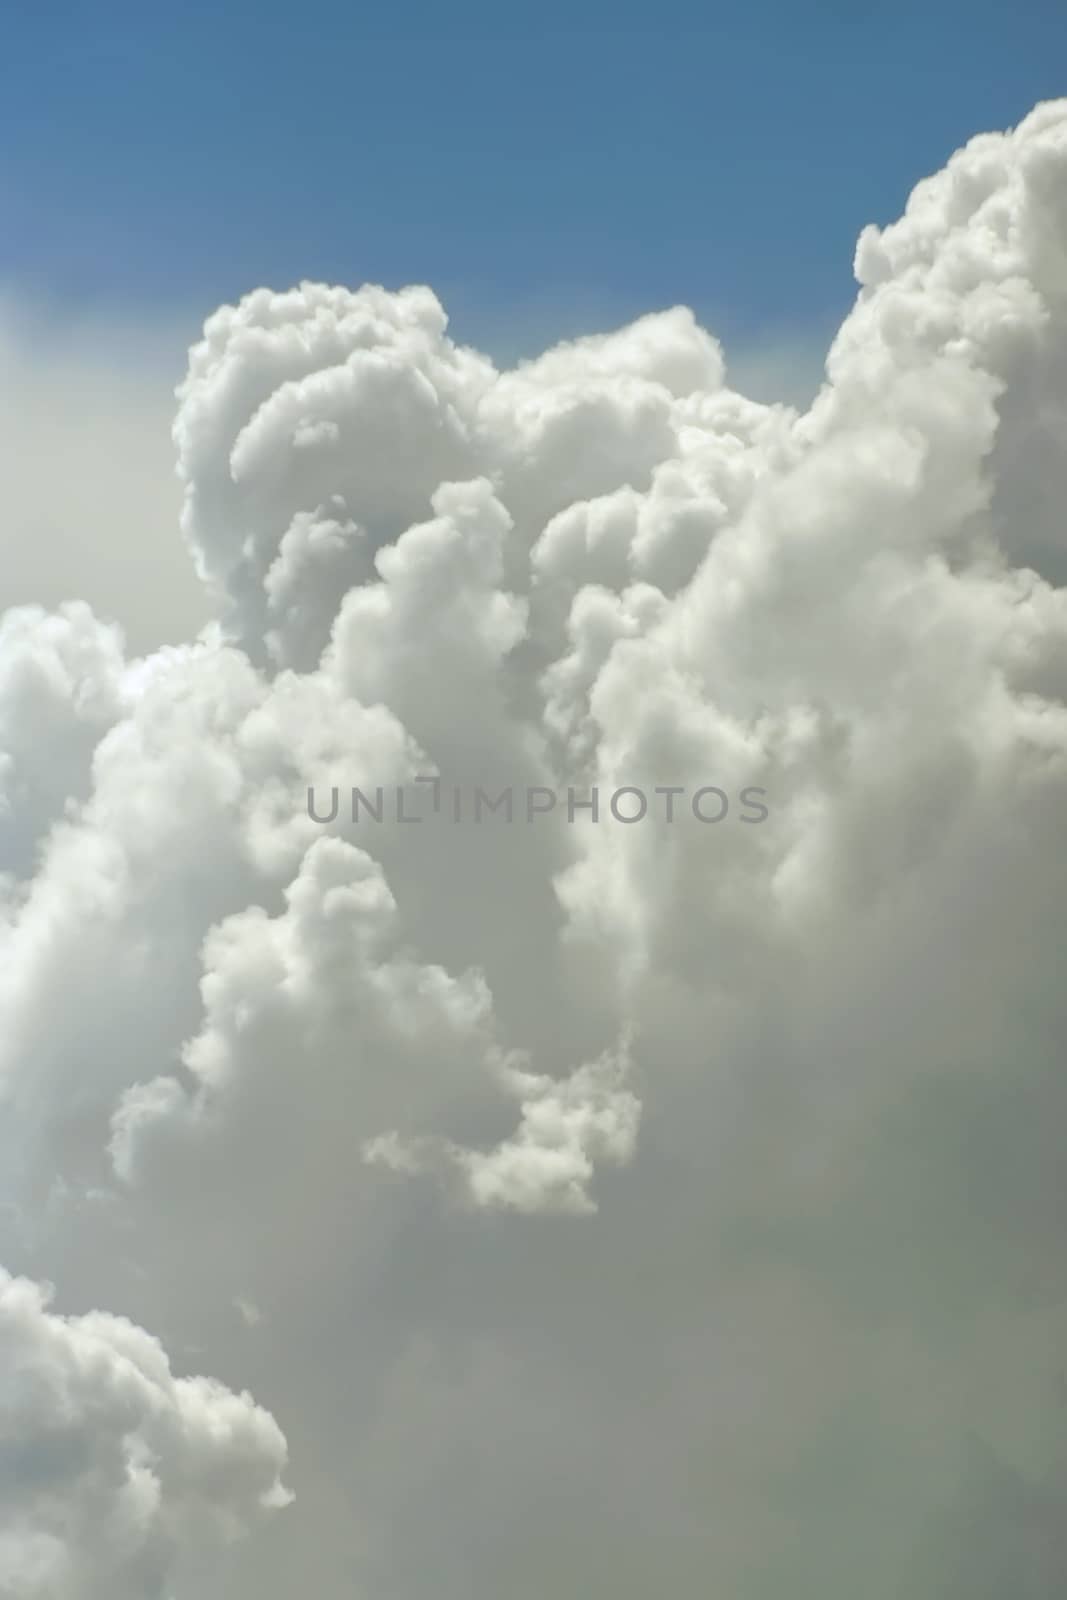 Cloud close up background by mowgli